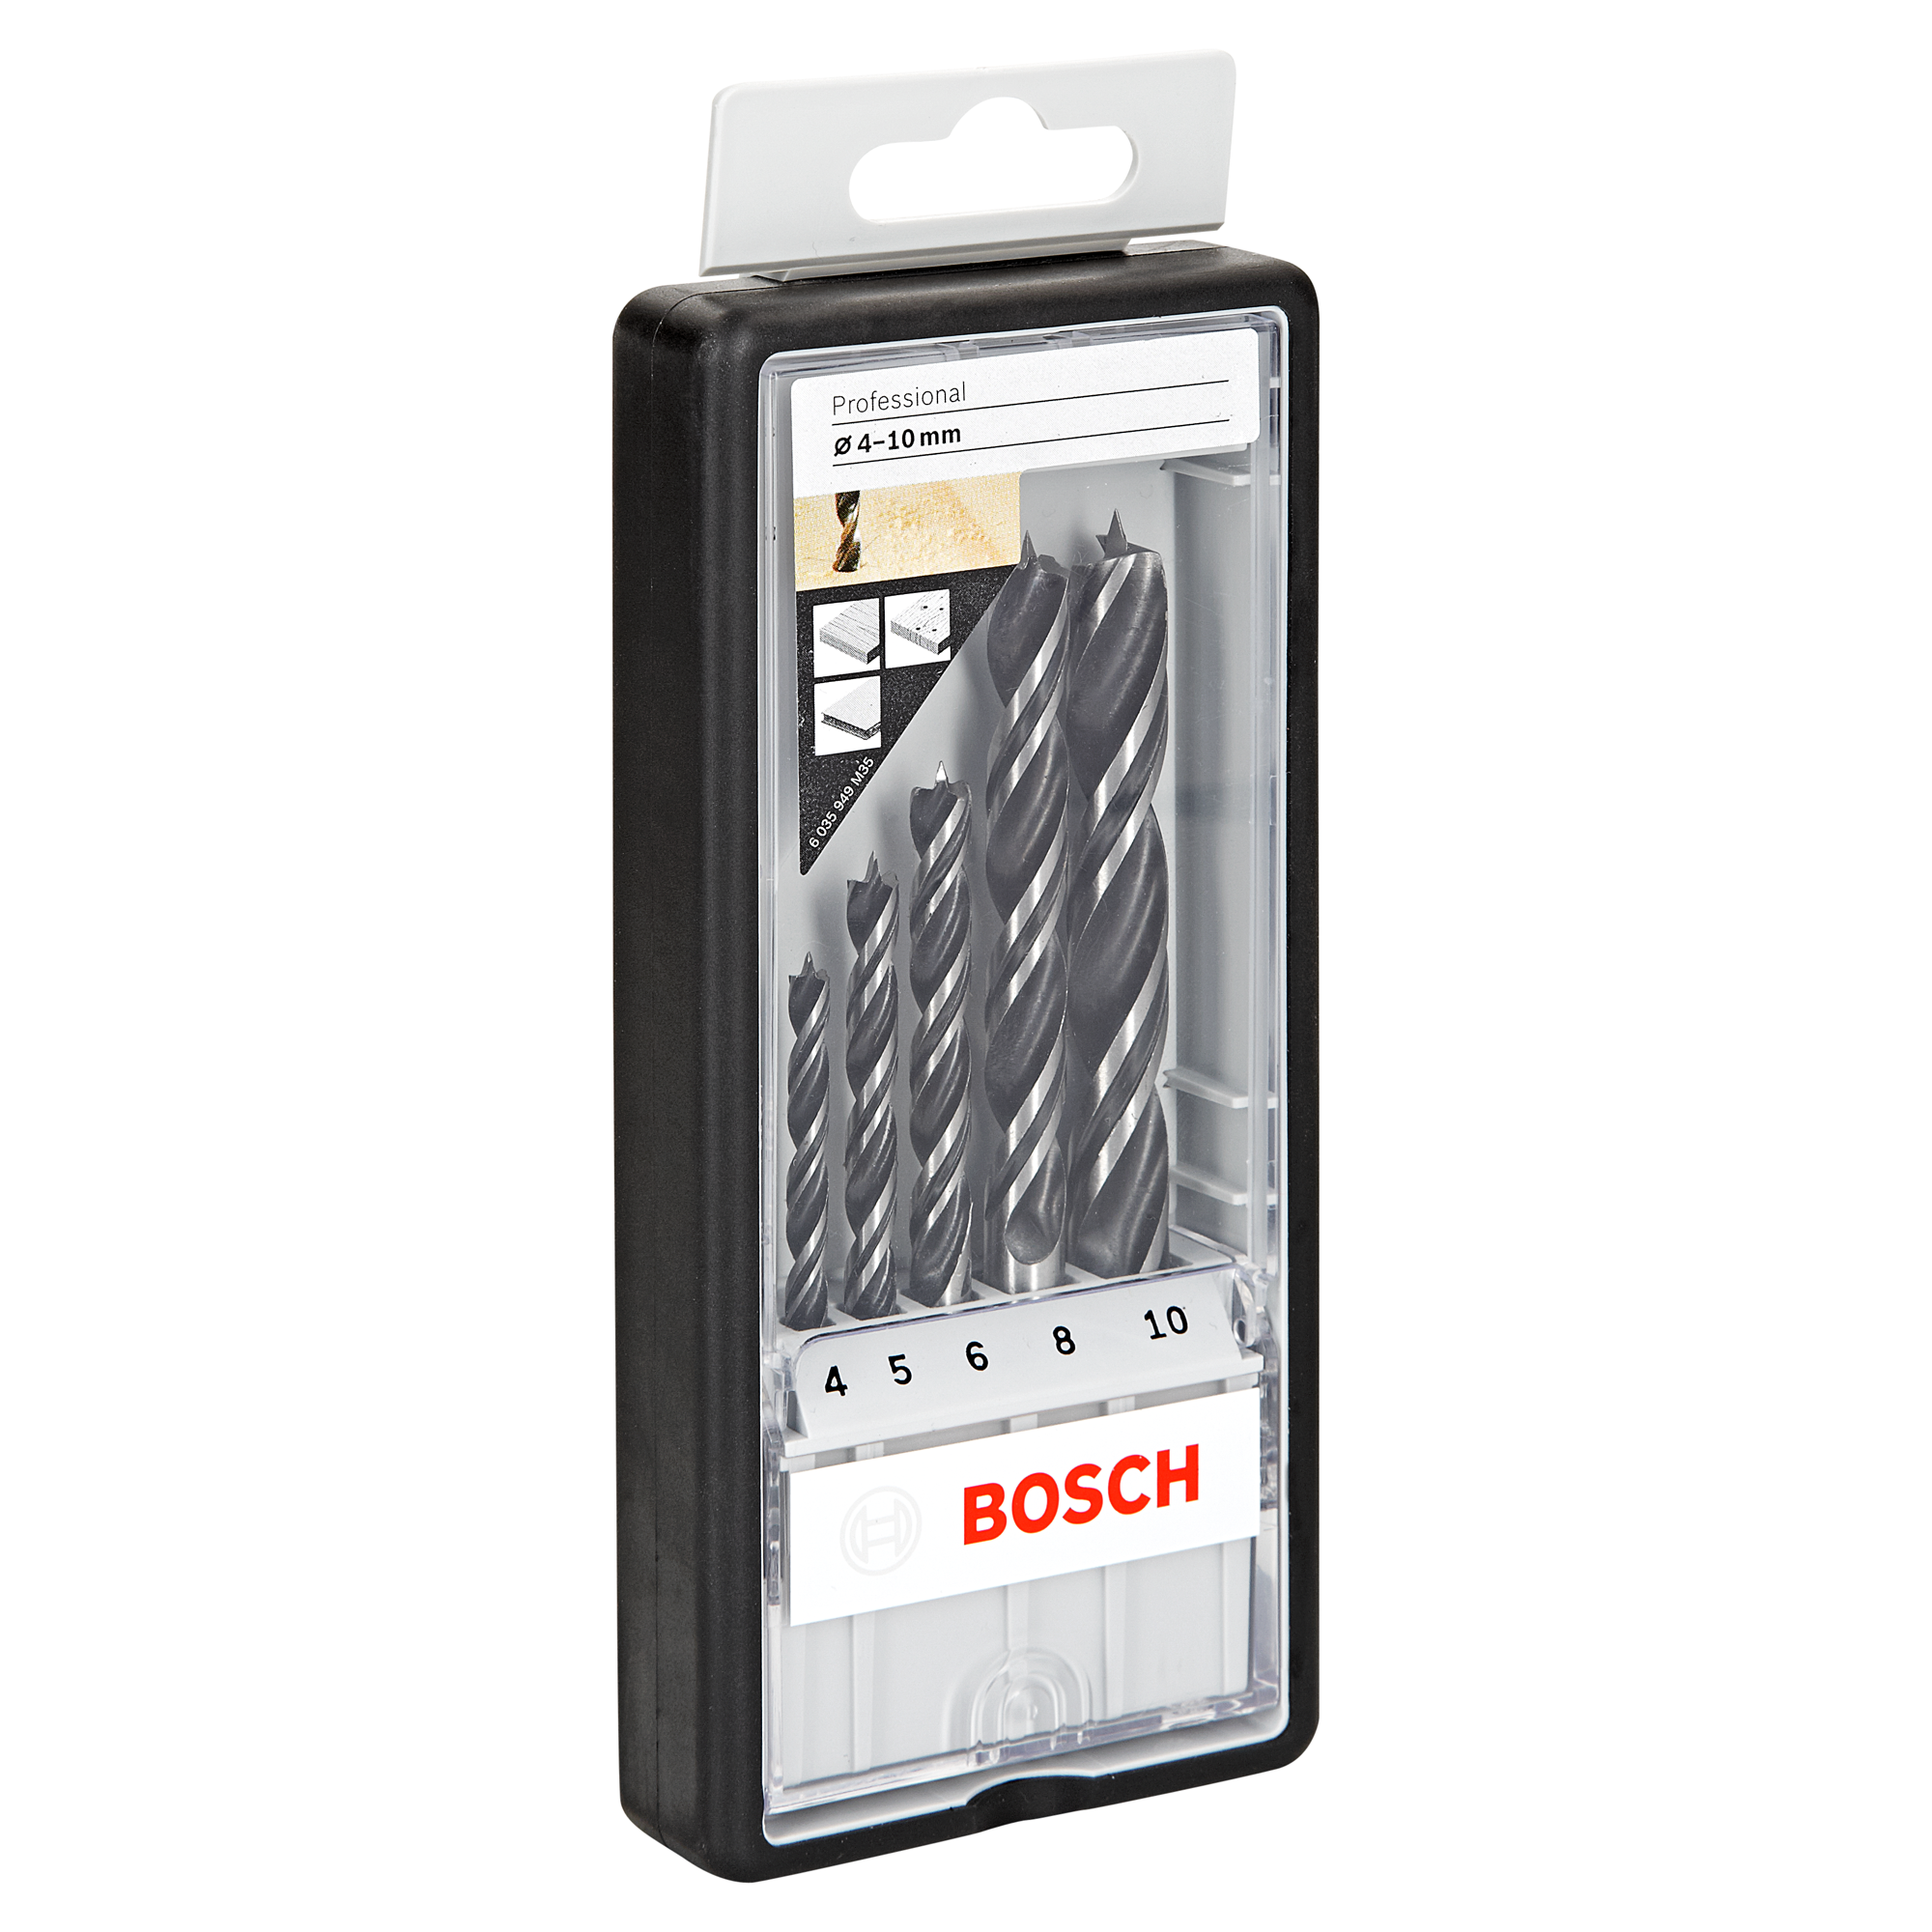 Bosch Profi-Holzbohrerset 5-teilig Ø 4-10 mm + product picture